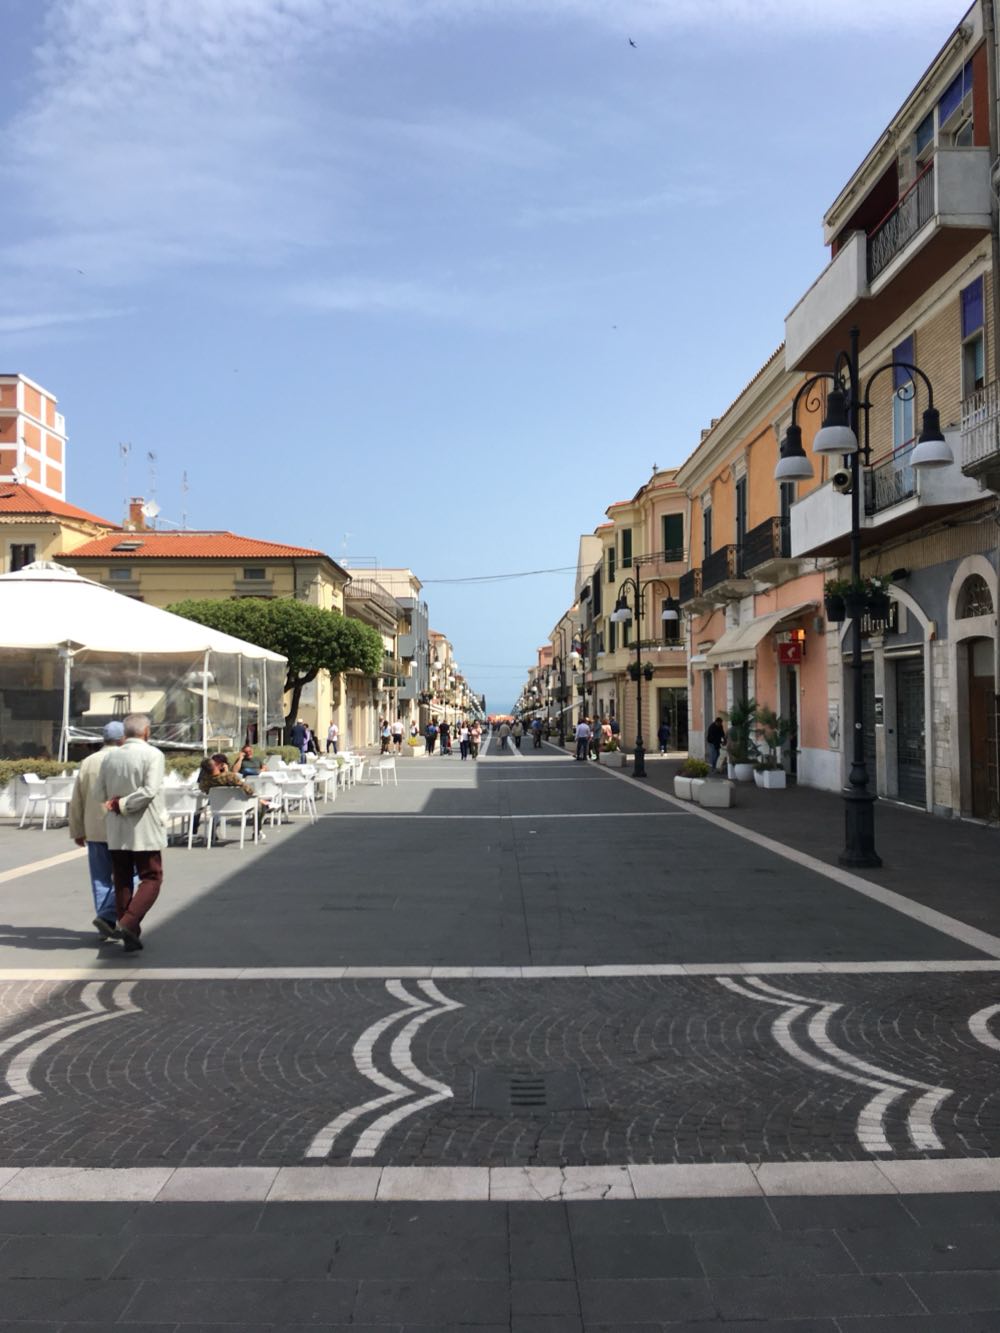 Photo of wide pedestrianised street